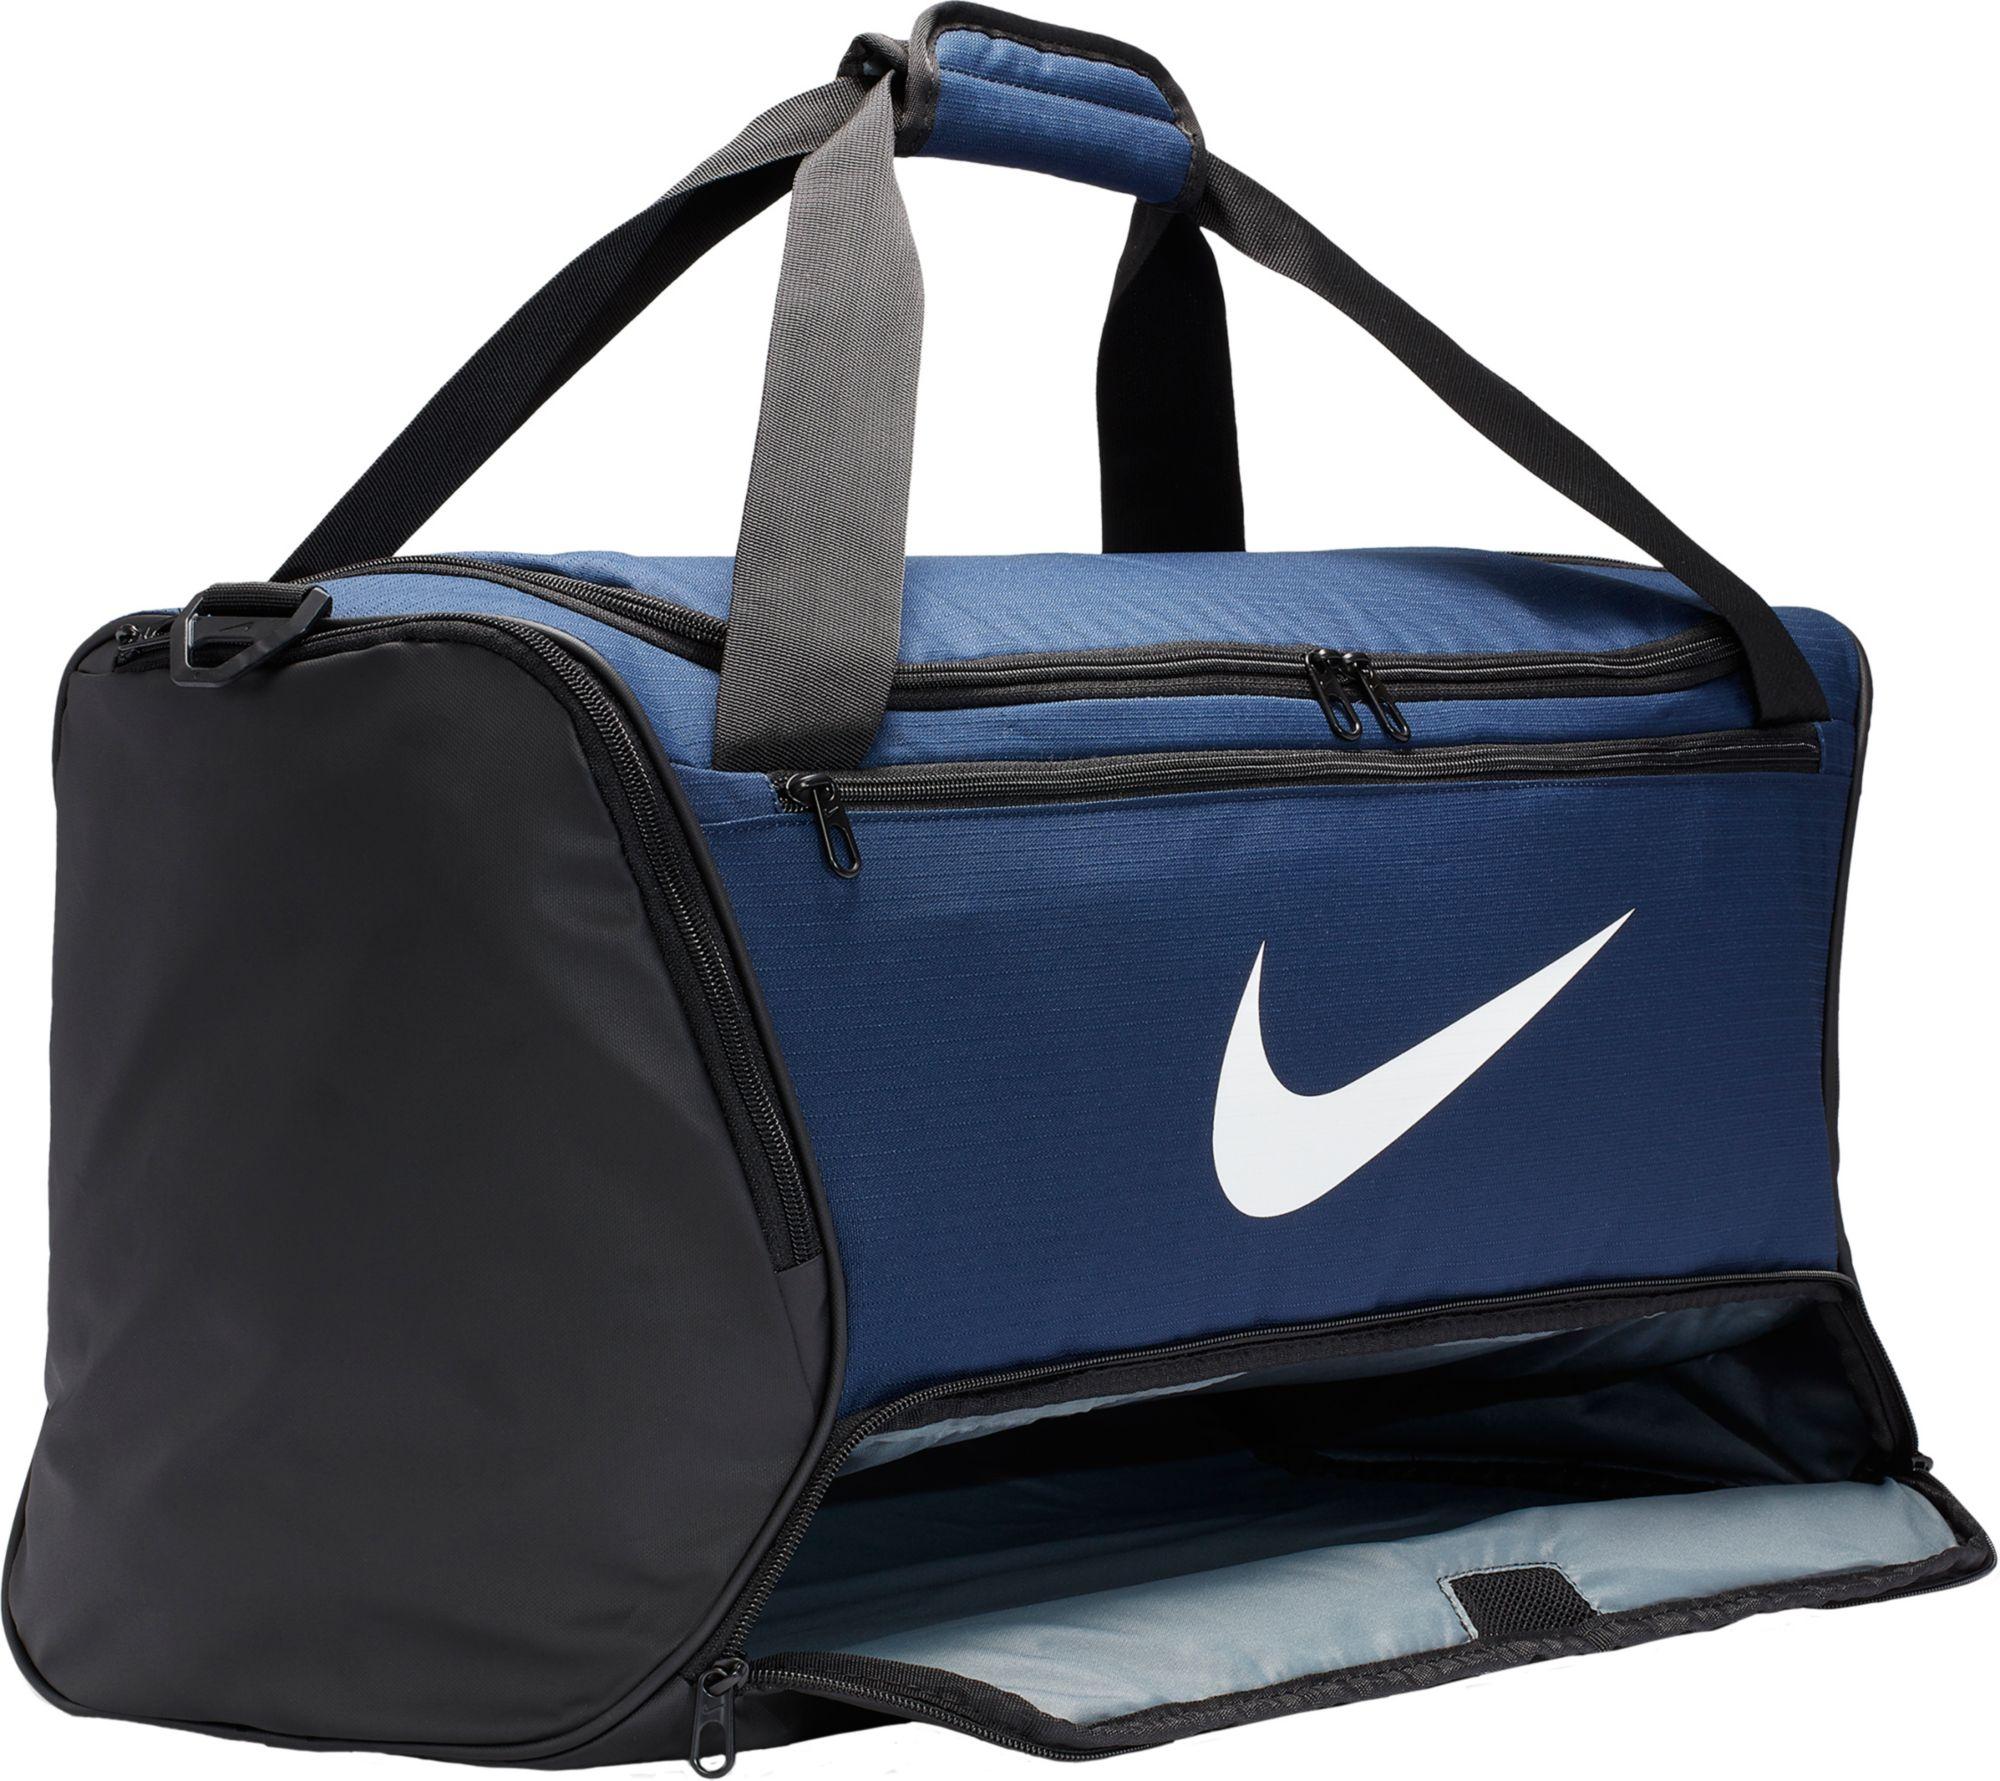 Nike Brasilia Training Duffel Bag (medium) in Navy (Blue) for Men - Lyst